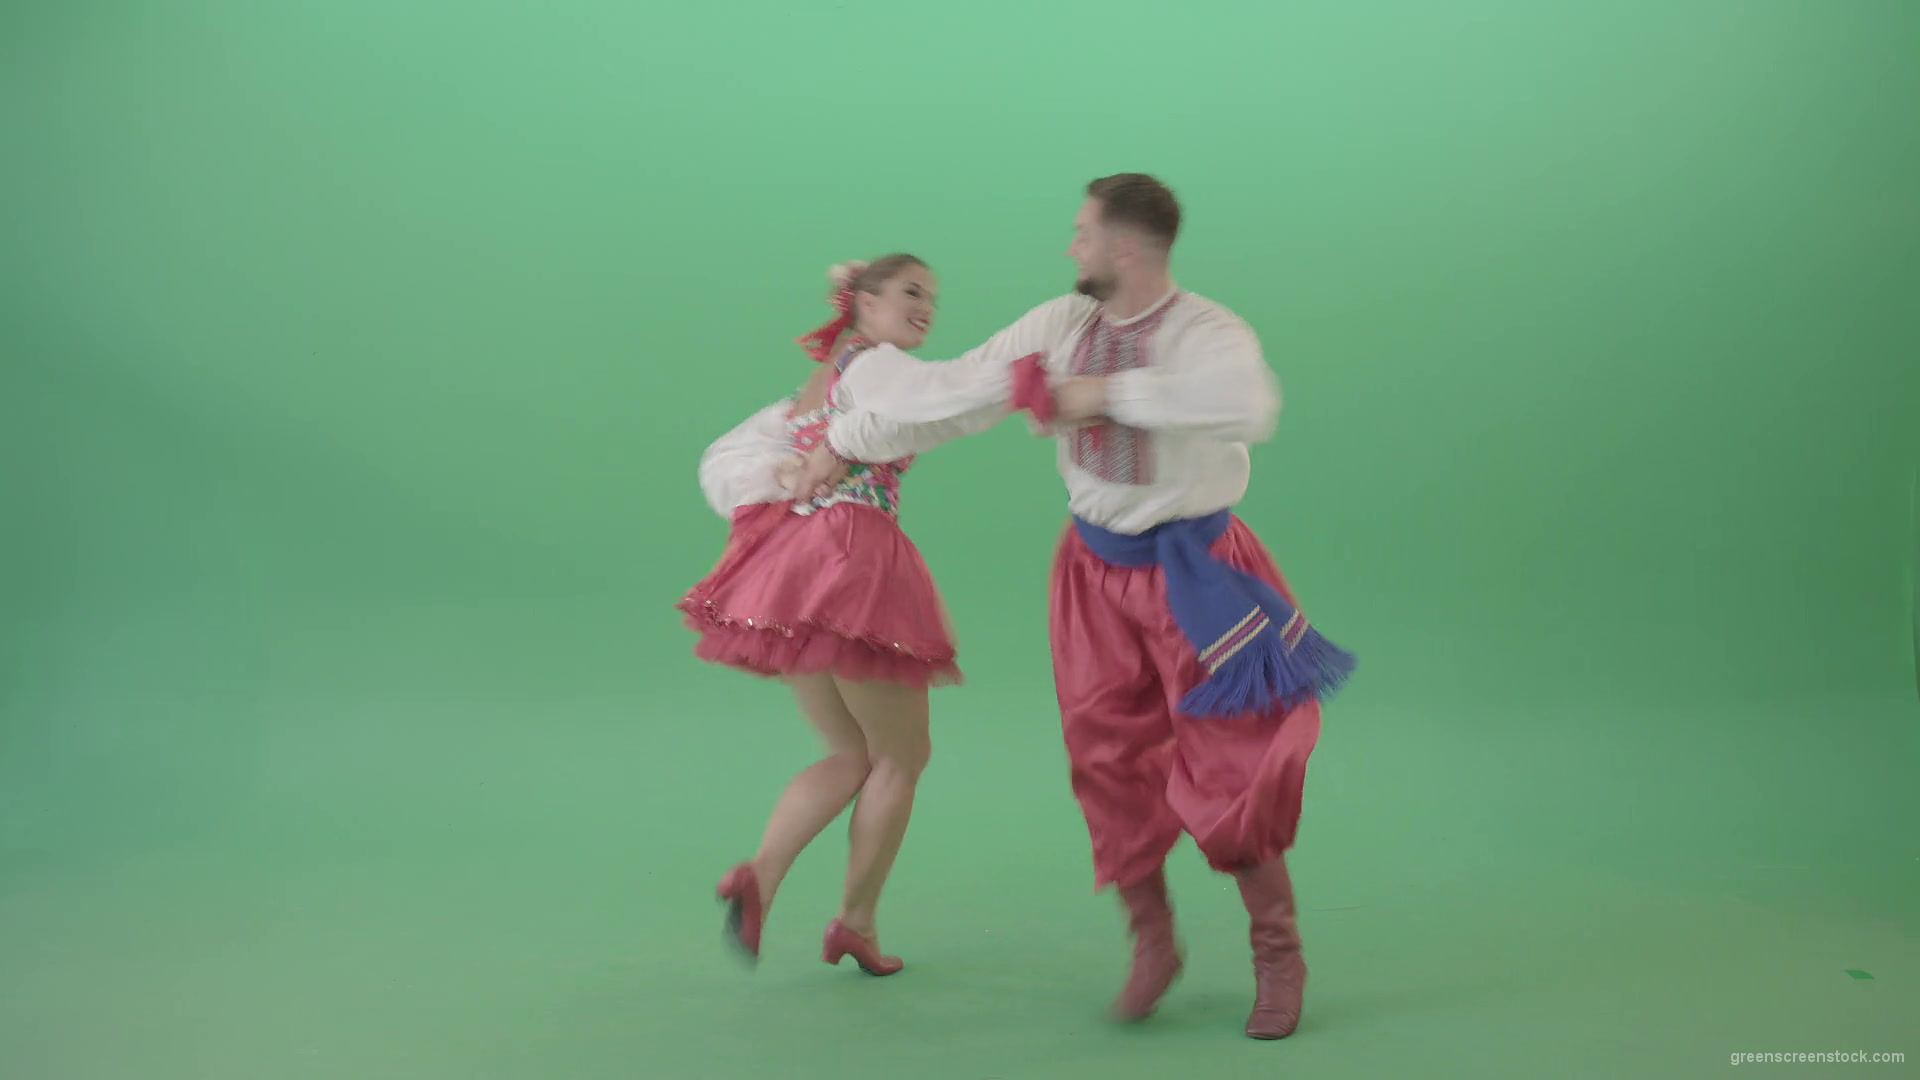 Folk-dance-Polka-in-Ukraine-national-dacing-couple-isolated-on-Green-Screen-4K-Video-Footage-1920_006 Green Screen Stock